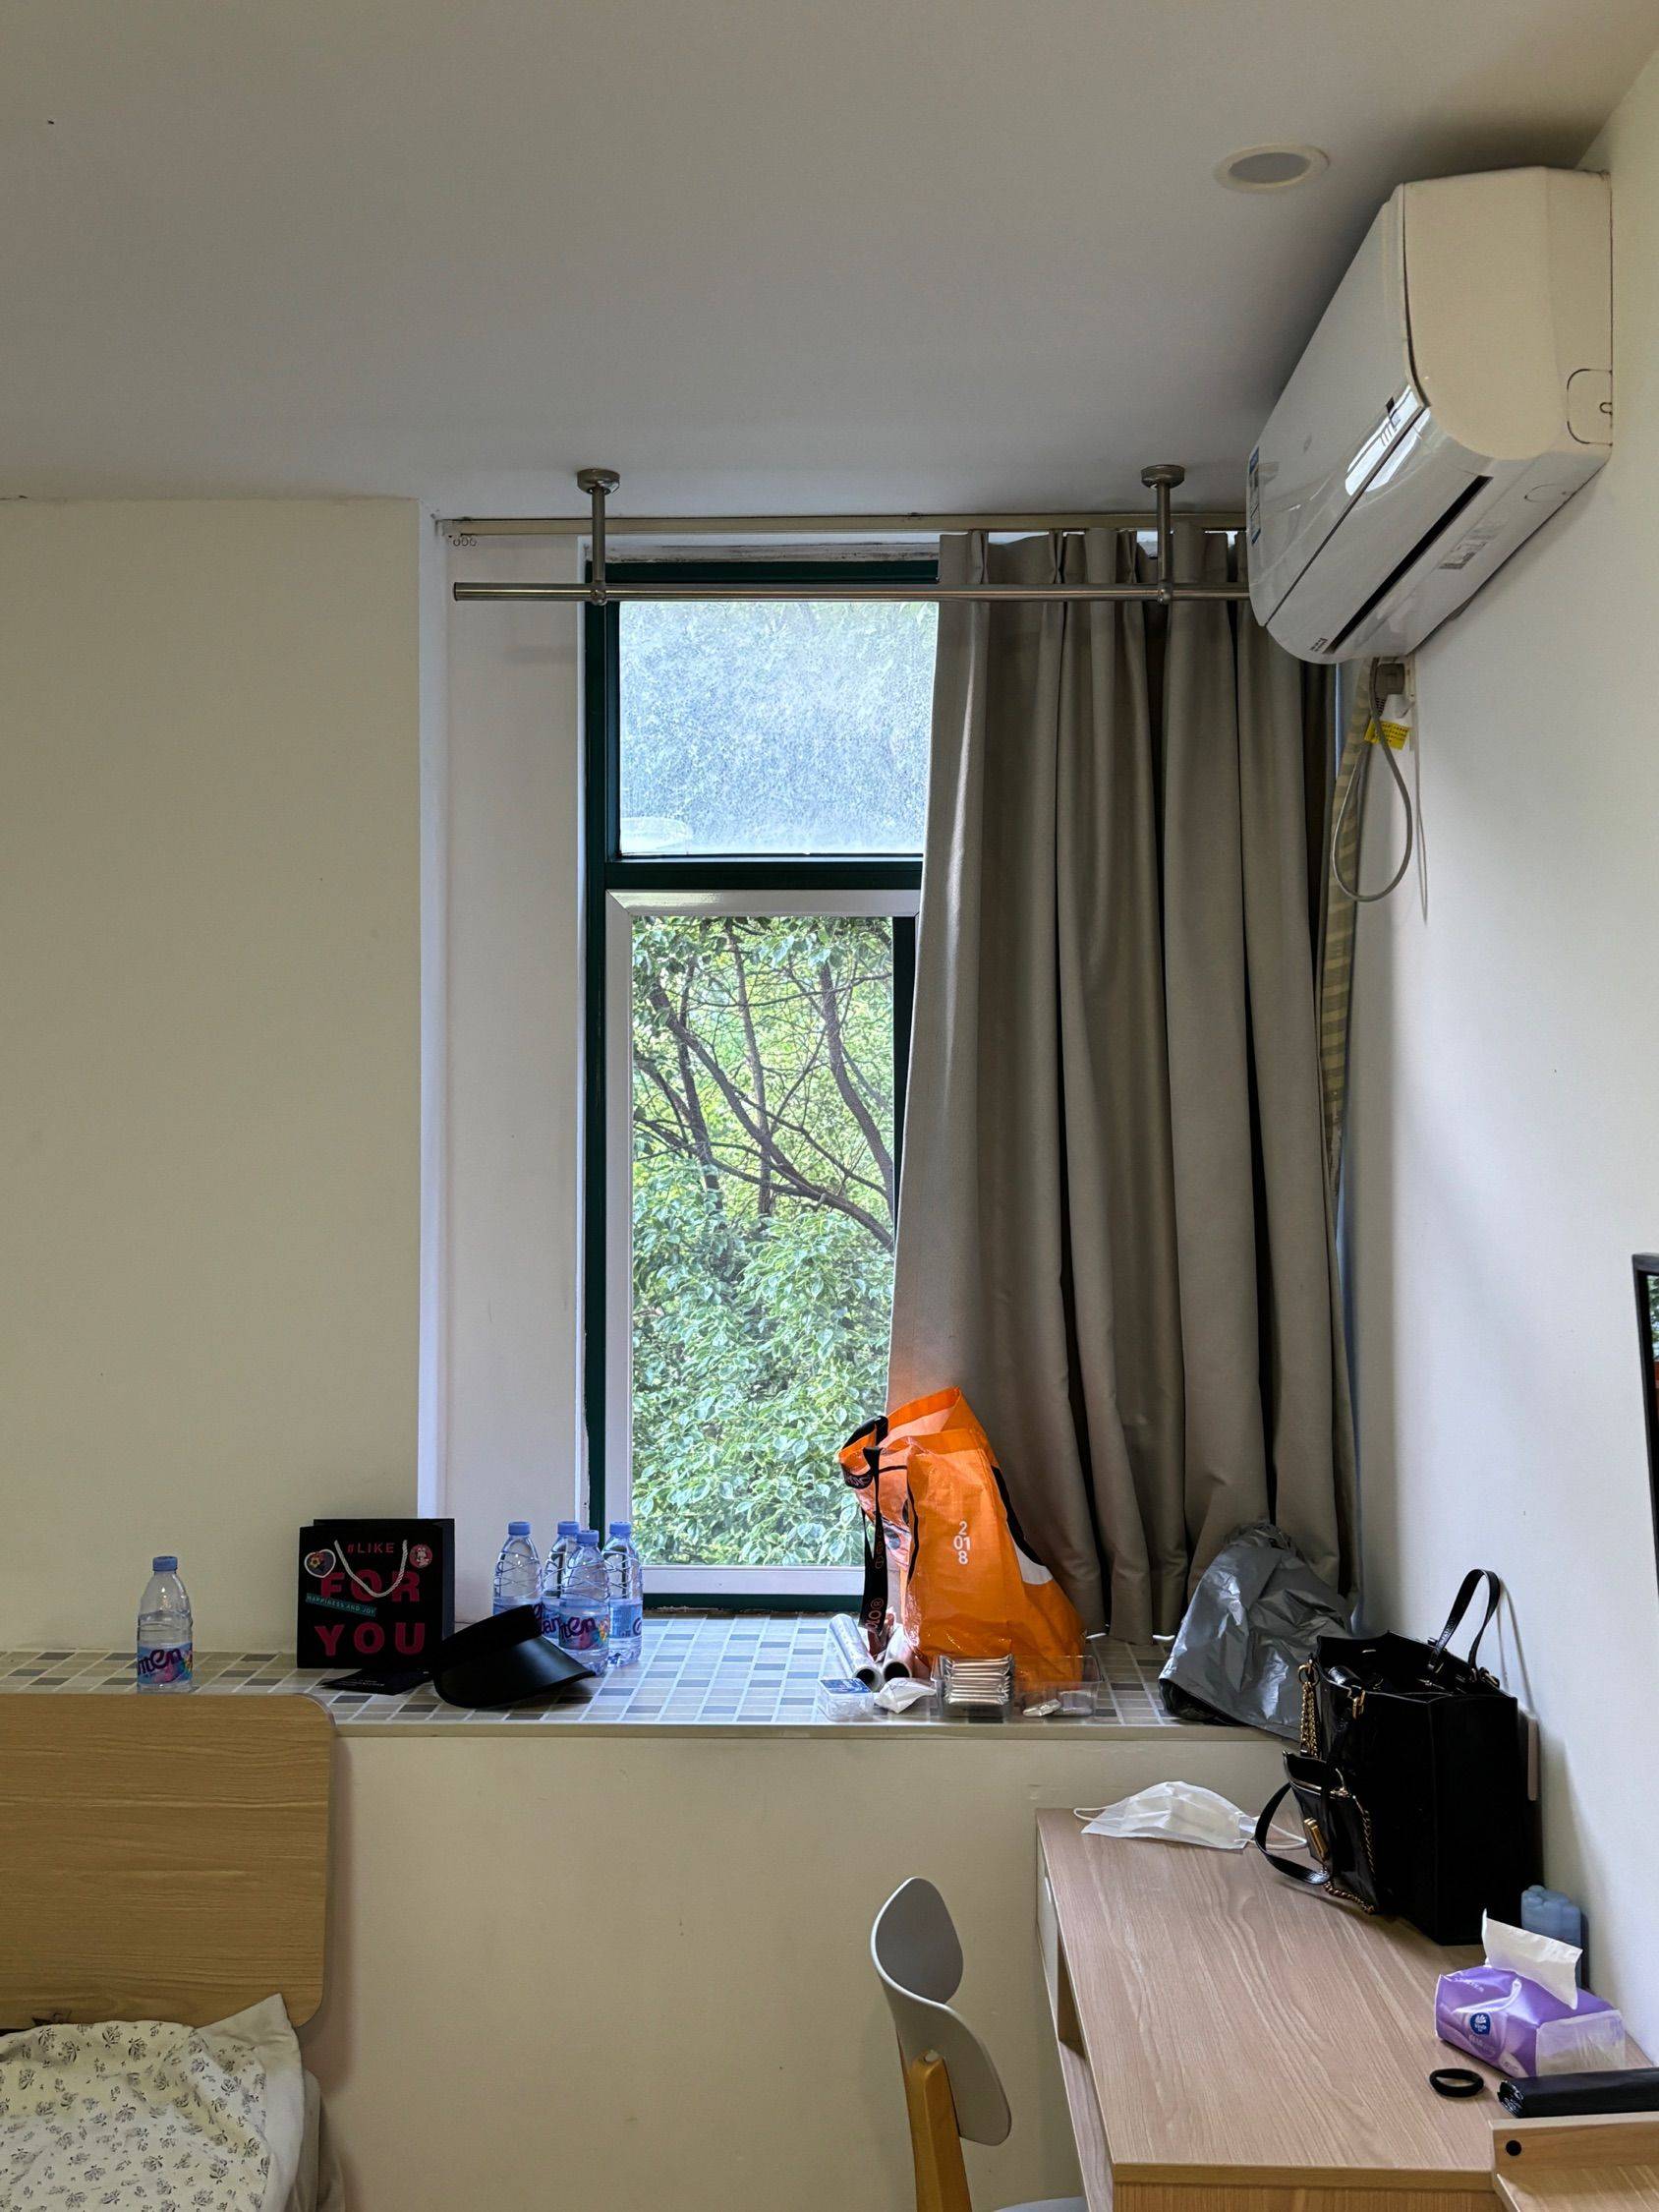 Hangzhou-Xihu-Cozy Home,Clean&Comfy,No Gender Limit,“Friends”